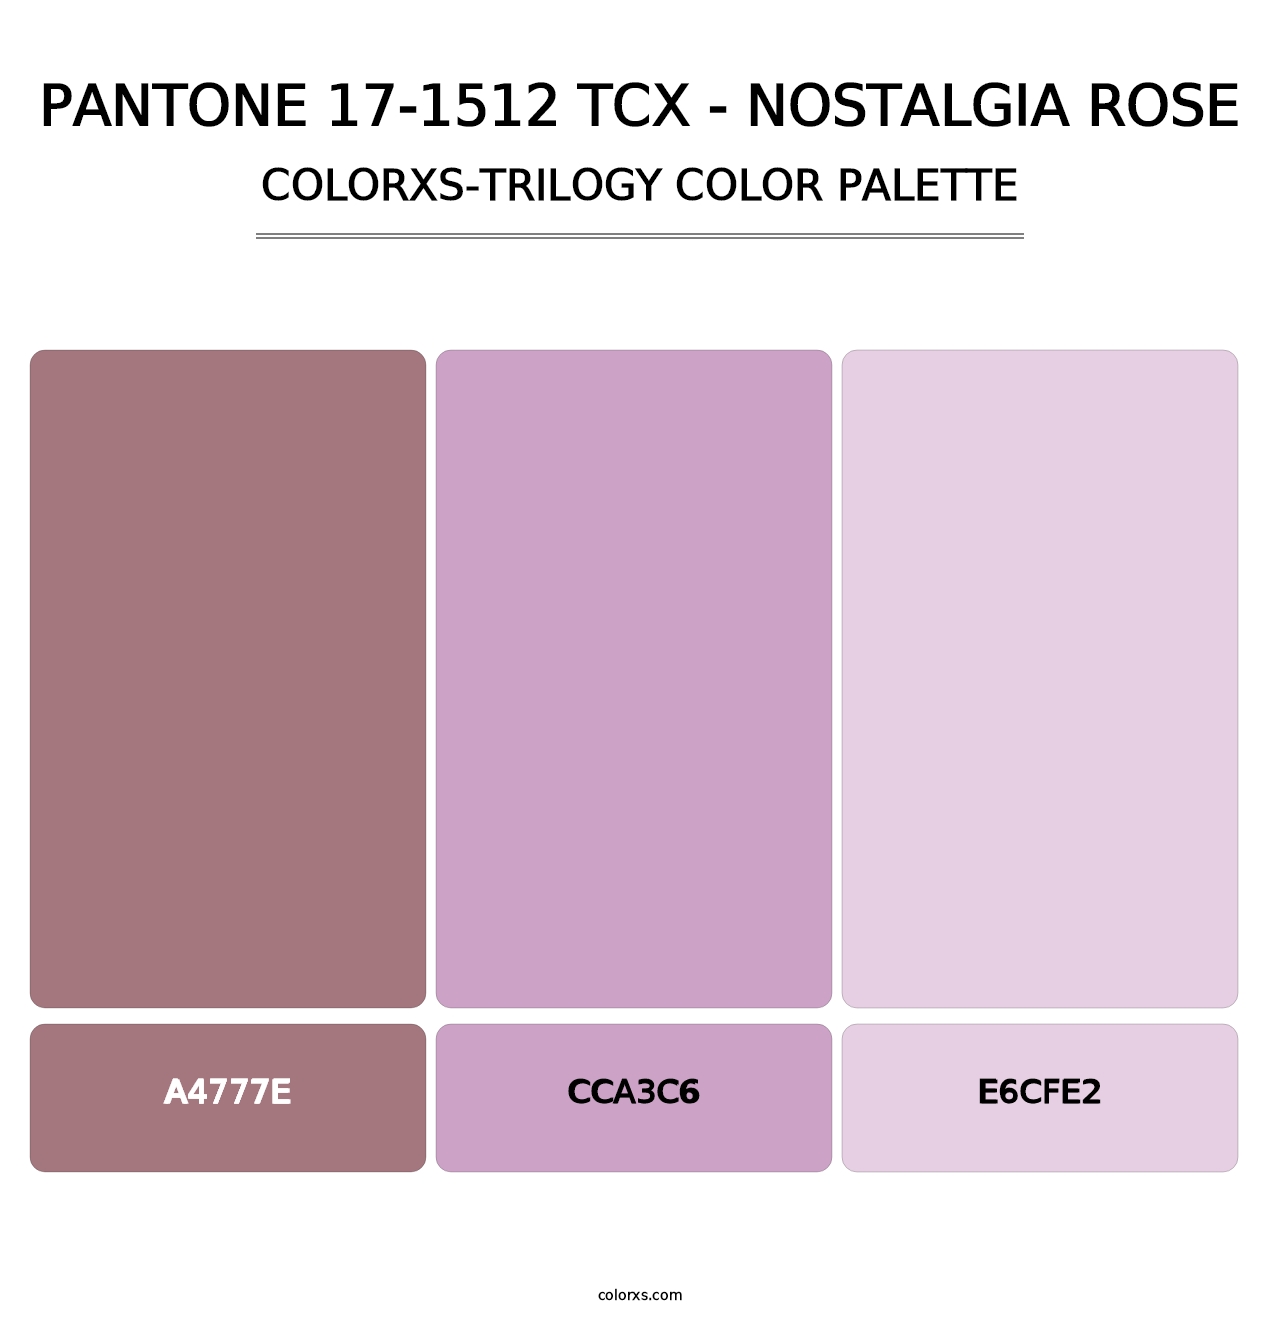 PANTONE 17-1512 TCX - Nostalgia Rose - Colorxs Trilogy Palette